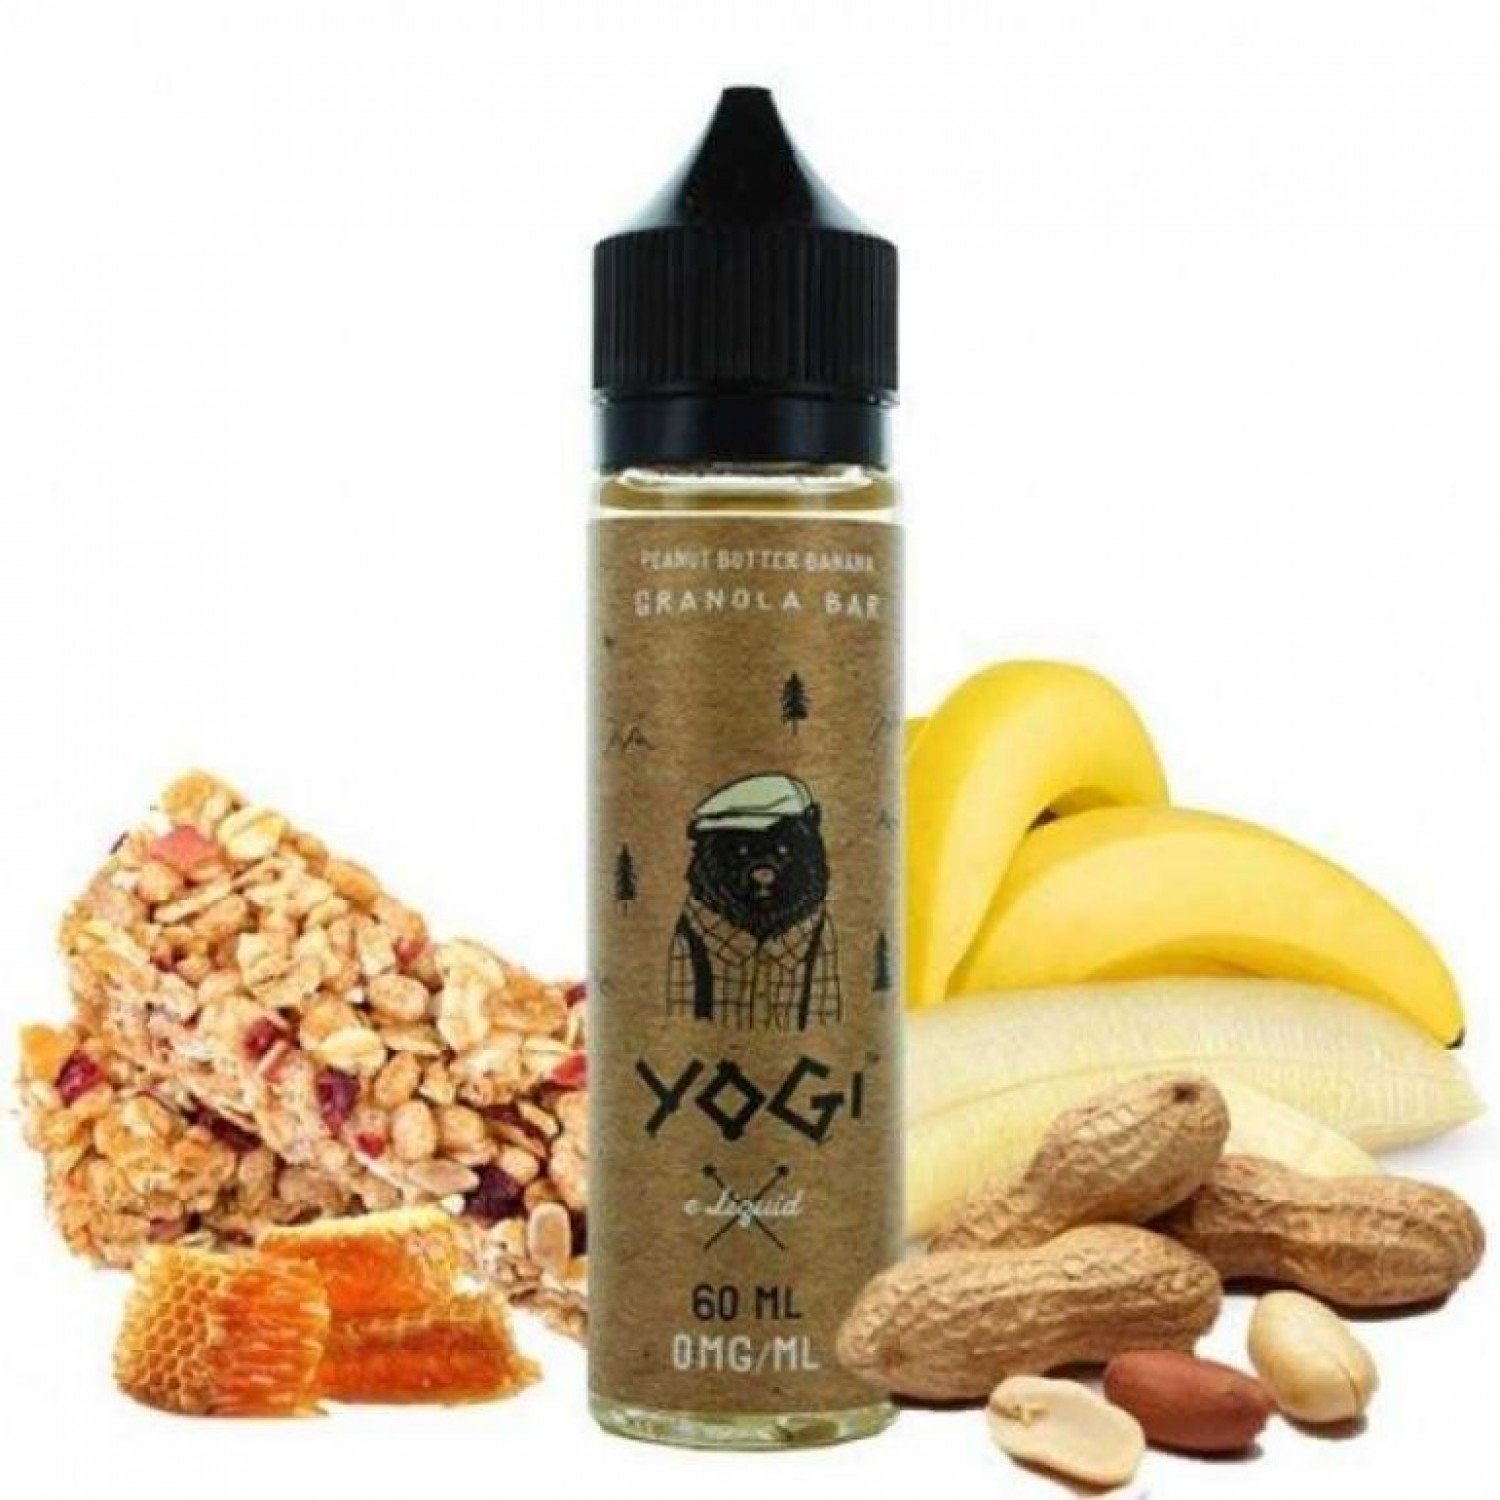 Yogi - Peanut Butter Banana 60ml Premium Likit